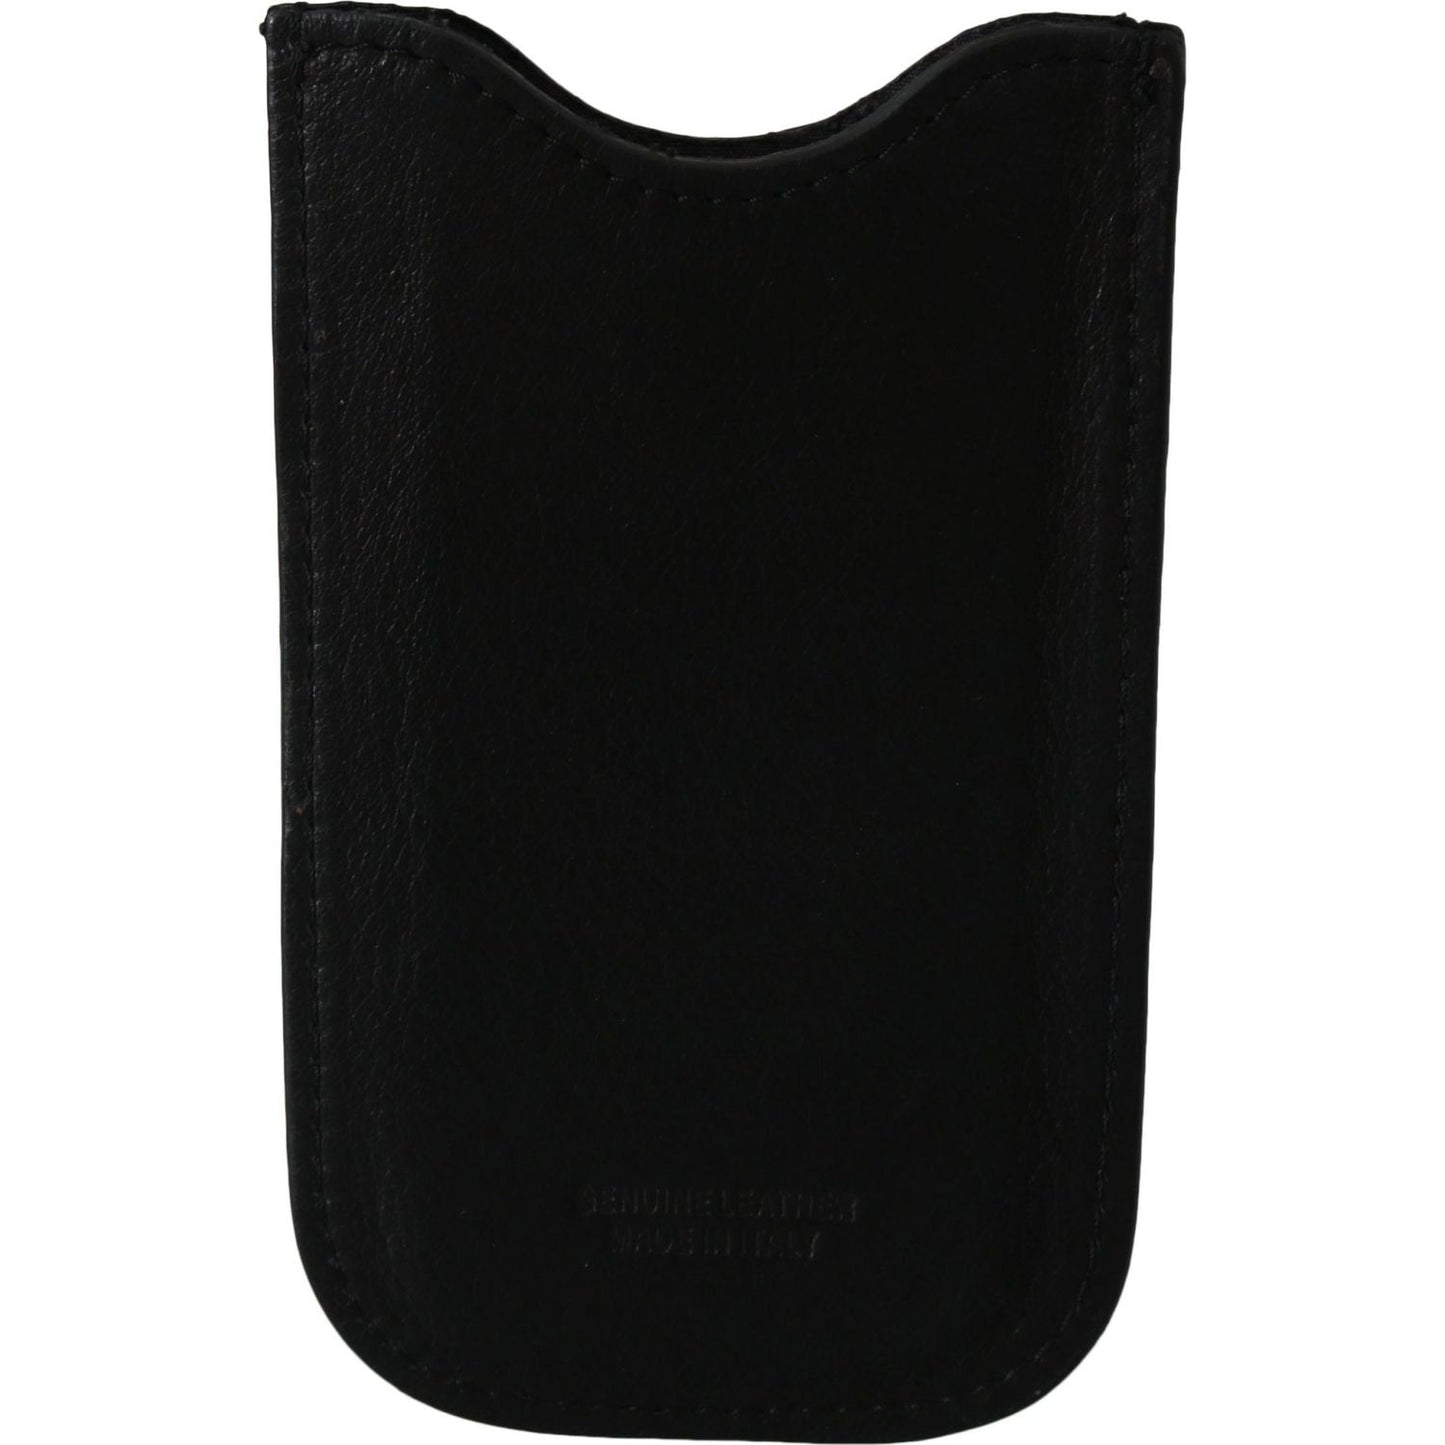 John Galliano Elegant Black Genuine Leather Men's Wallet Wallet black-leather-multifunctional-men-id-bill-card-holder-wallet IMG_1773-scaled-fc1b9ba5-393.jpg